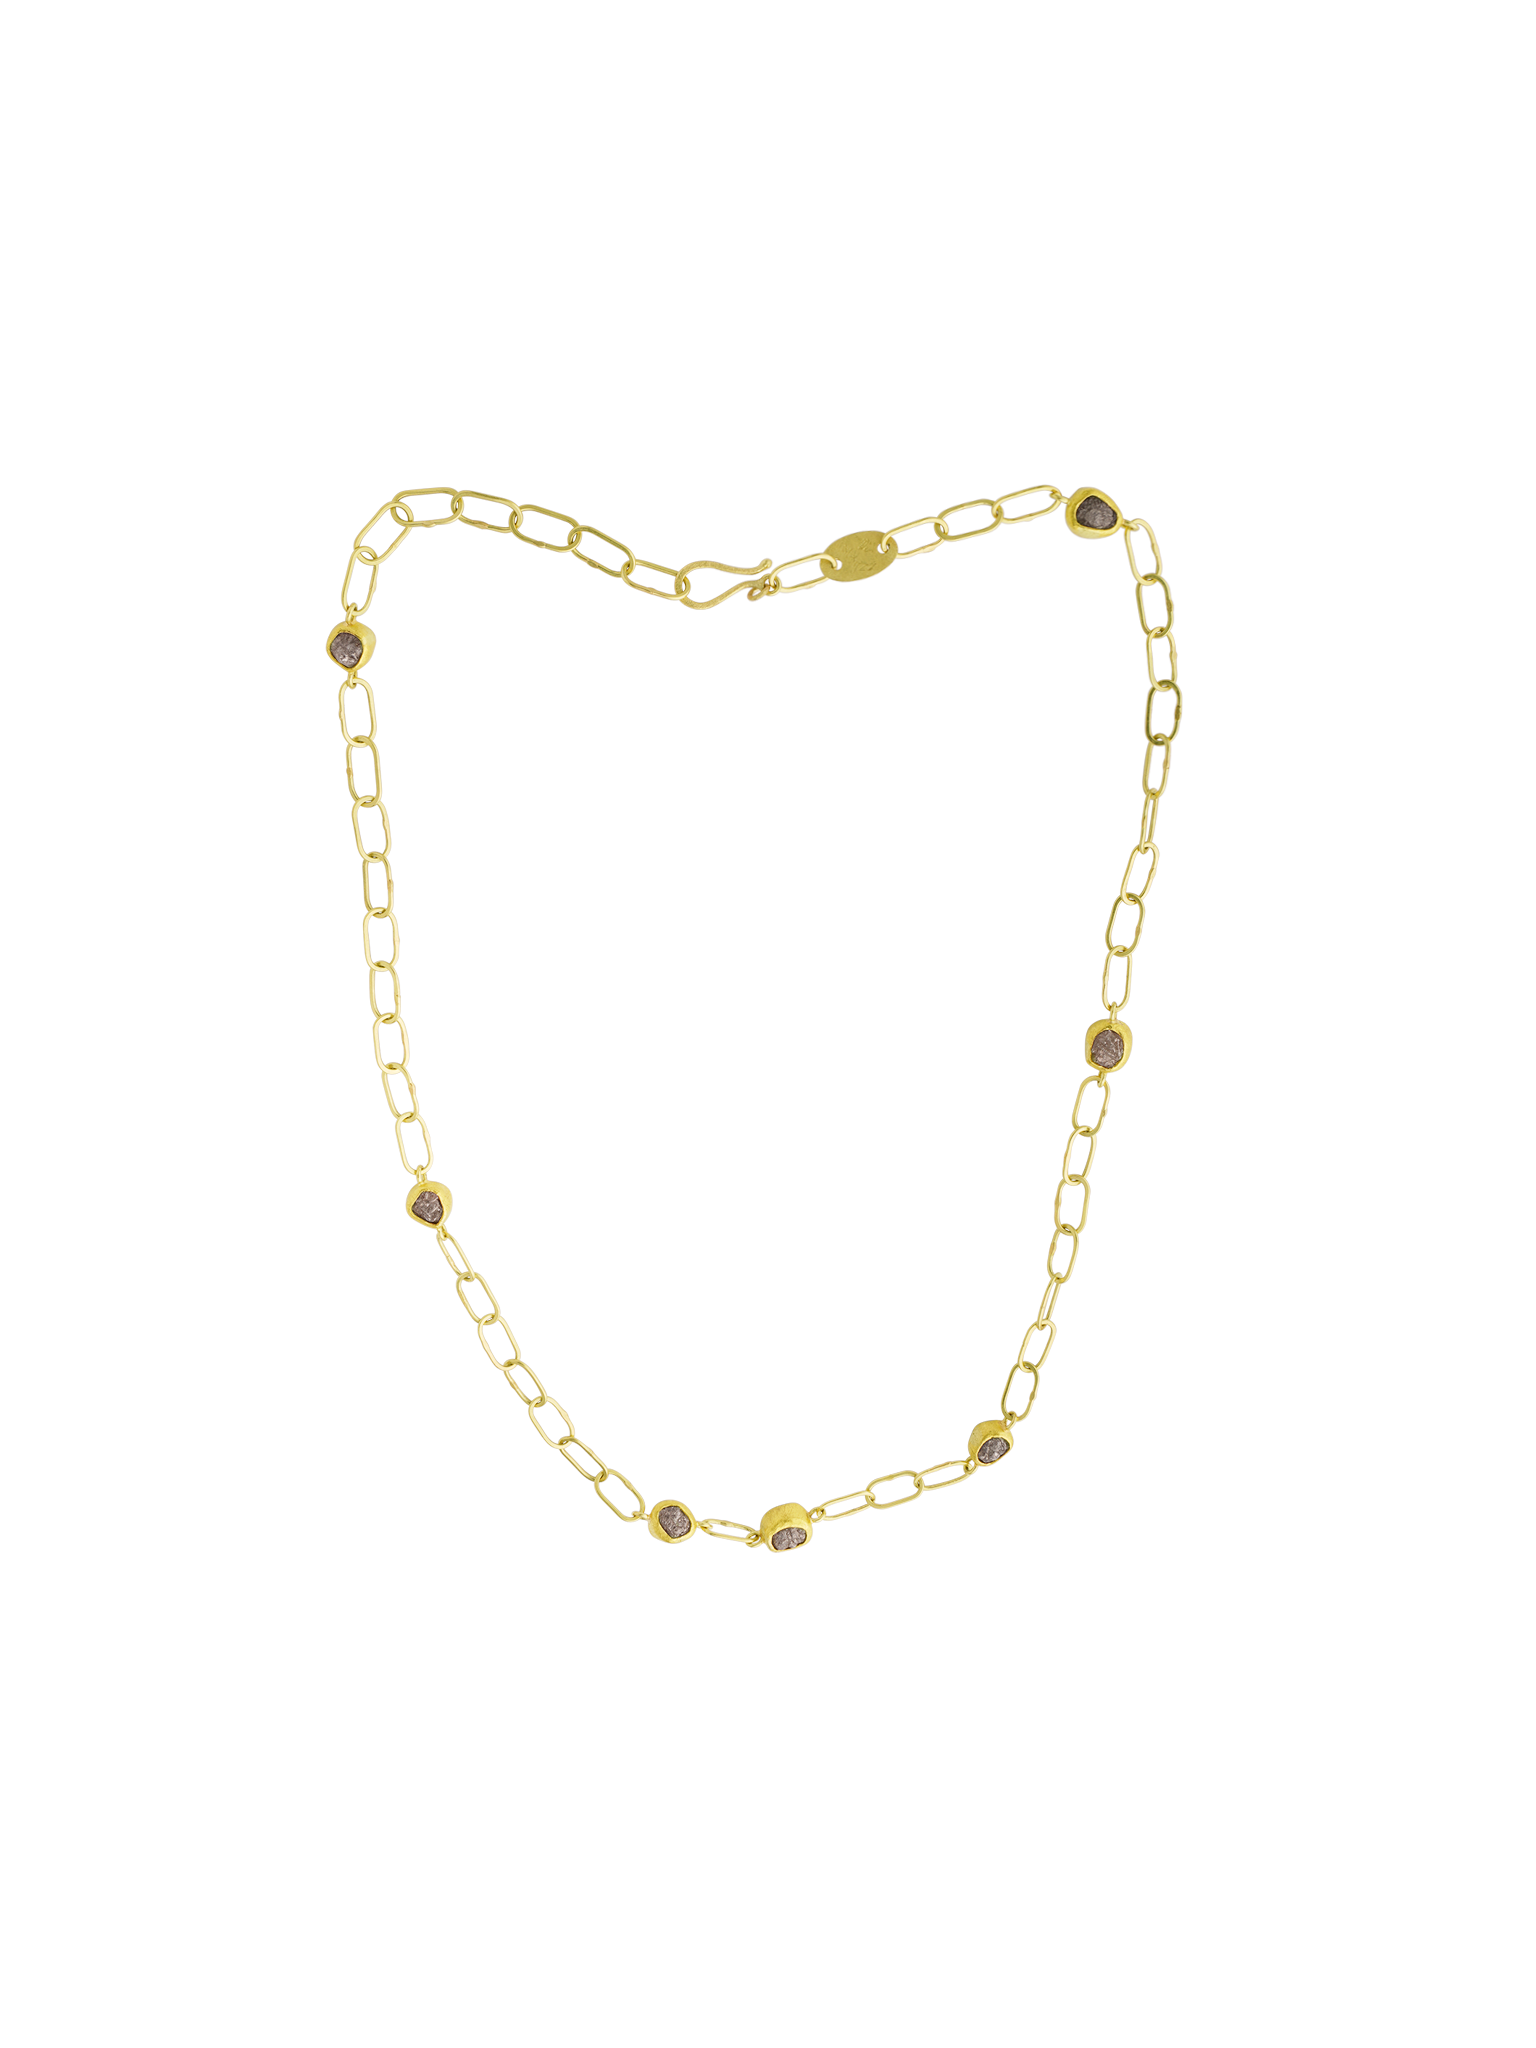 Rough diamond chain necklace